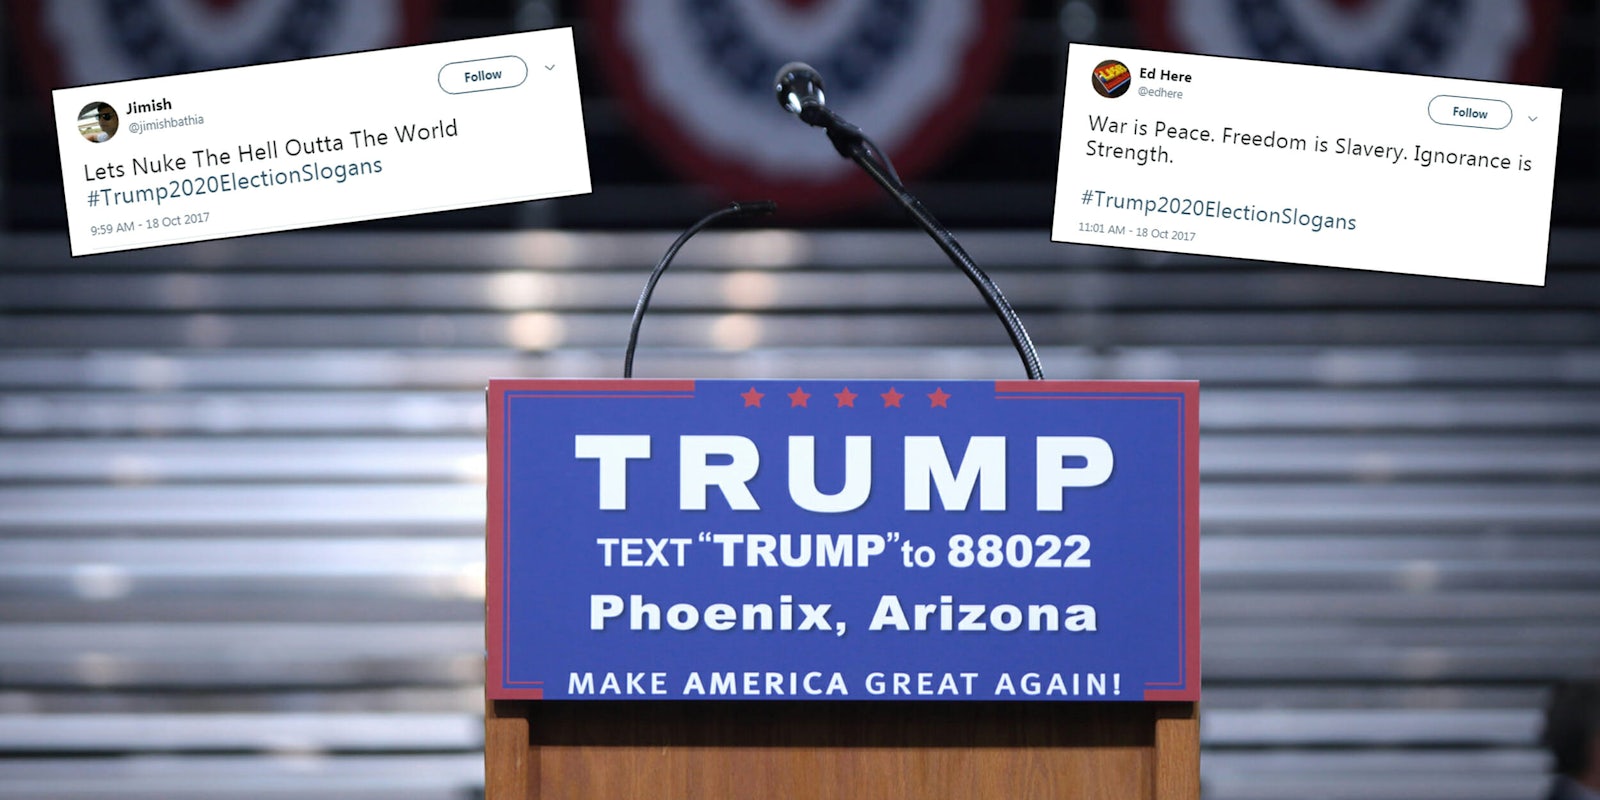 #Trump2020ElectionSlogans is trending on Twitter.